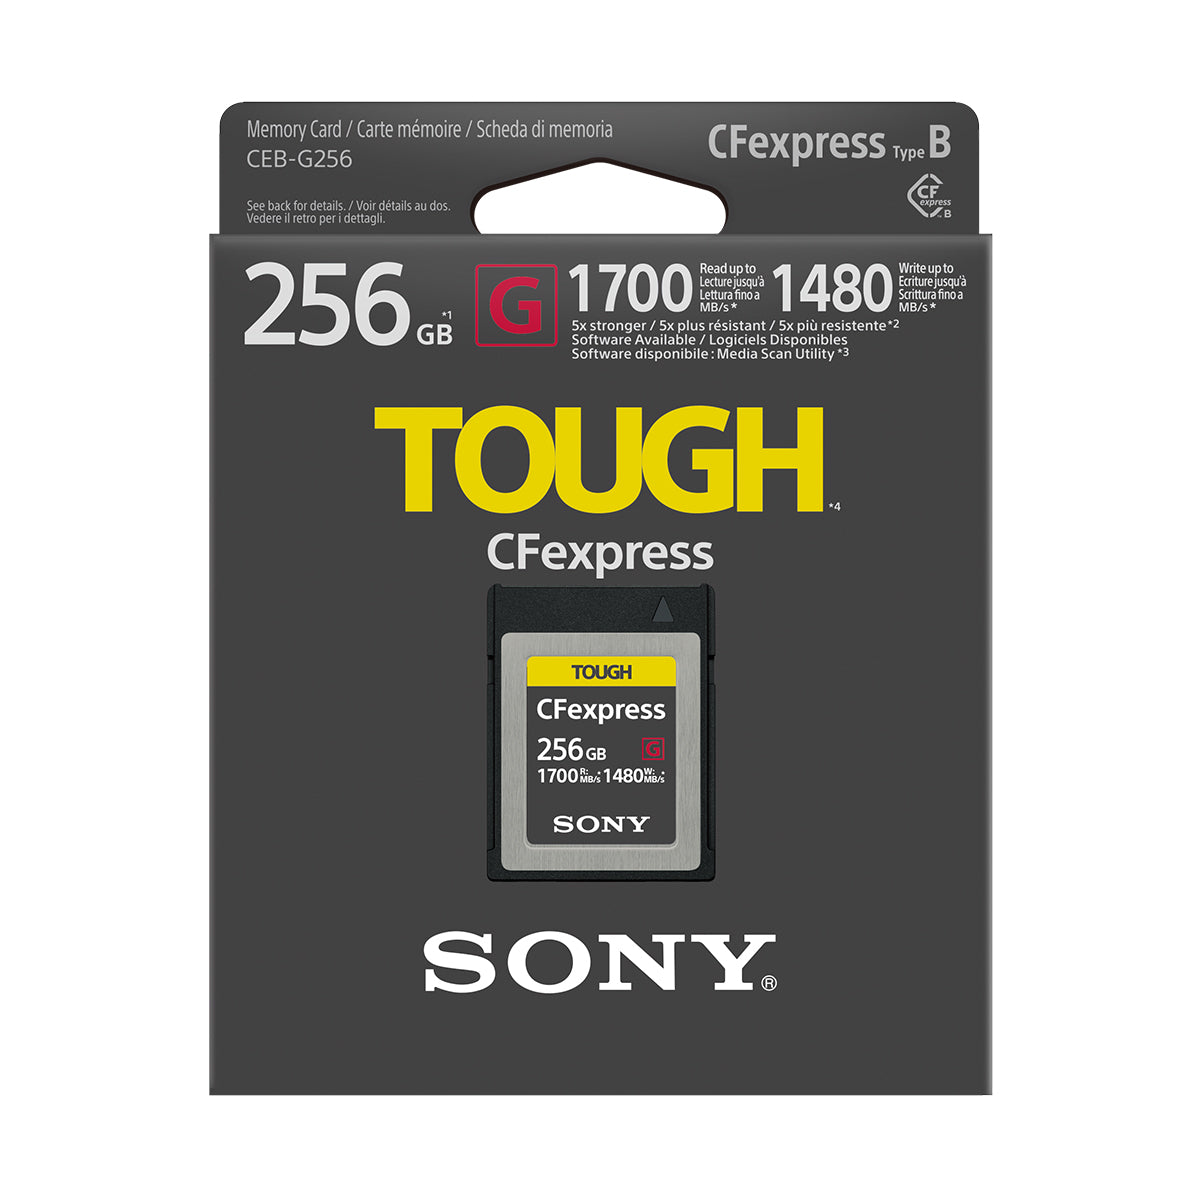 Sony TOUGH 256GB CFexpress Type B Card